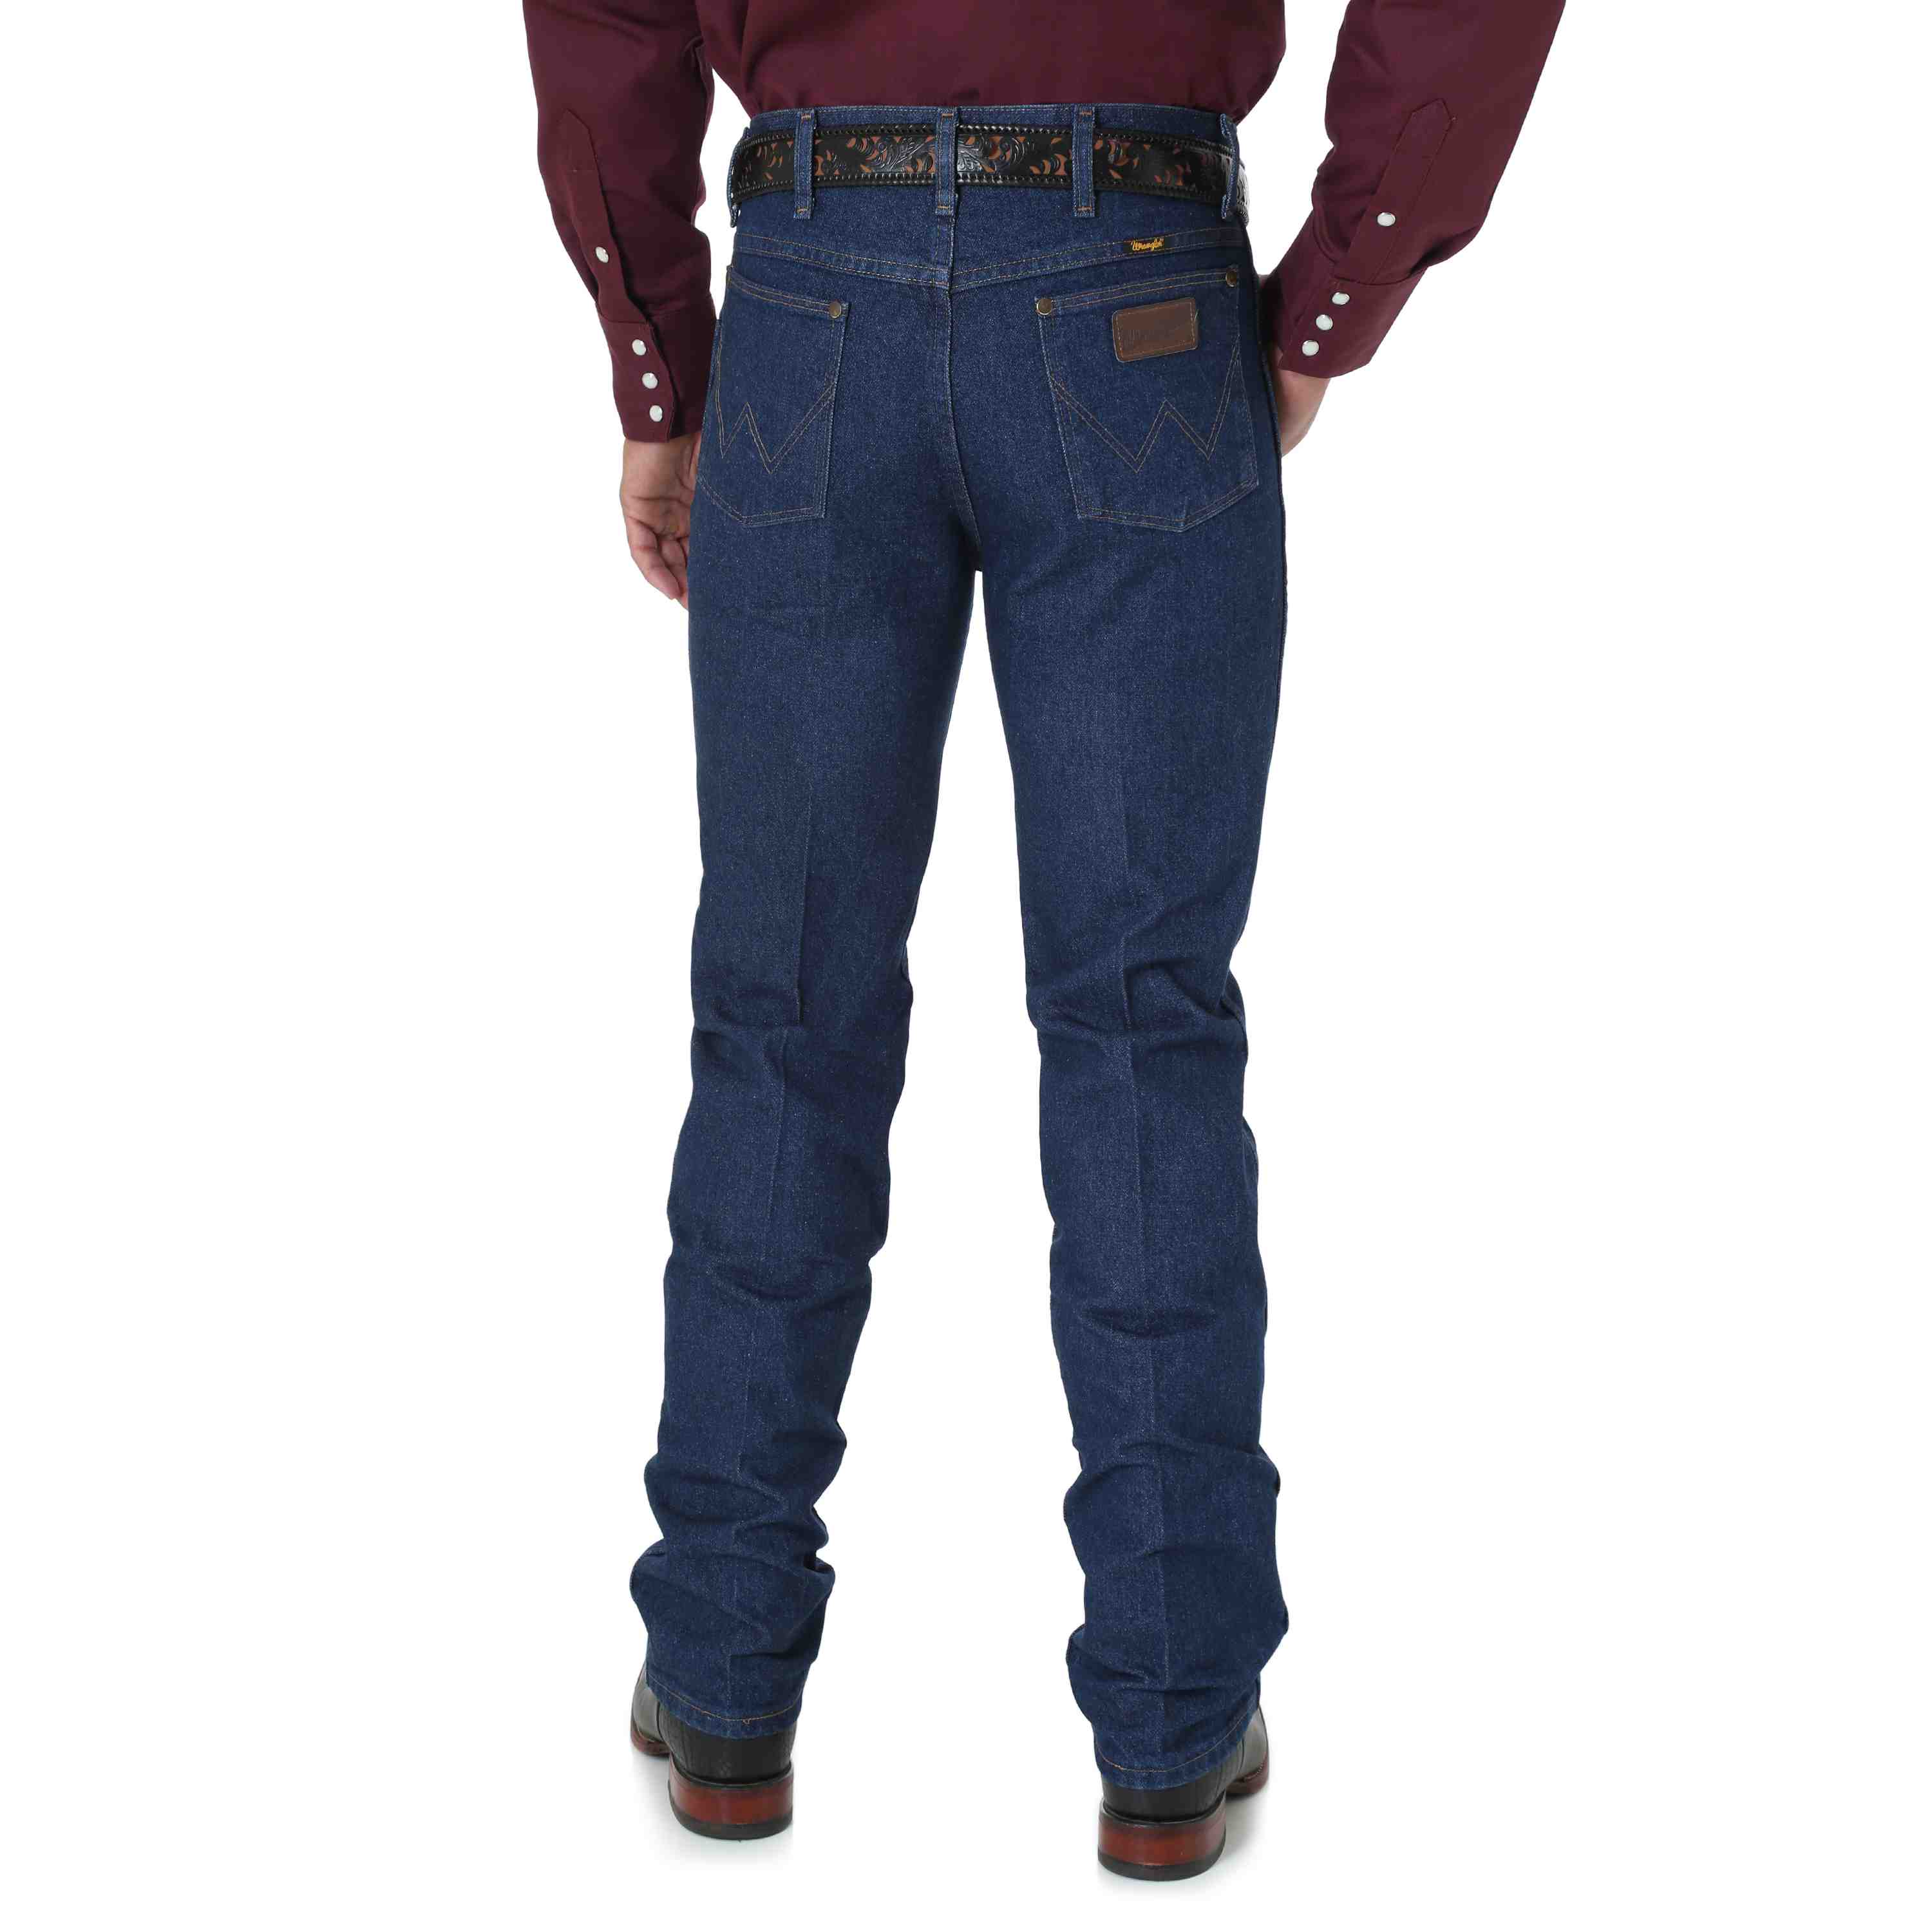 Wrangler Men's Premium Performance Prewashed Slim Fit Jeans 36MWZPD -  Russell's Western Wear, Inc.